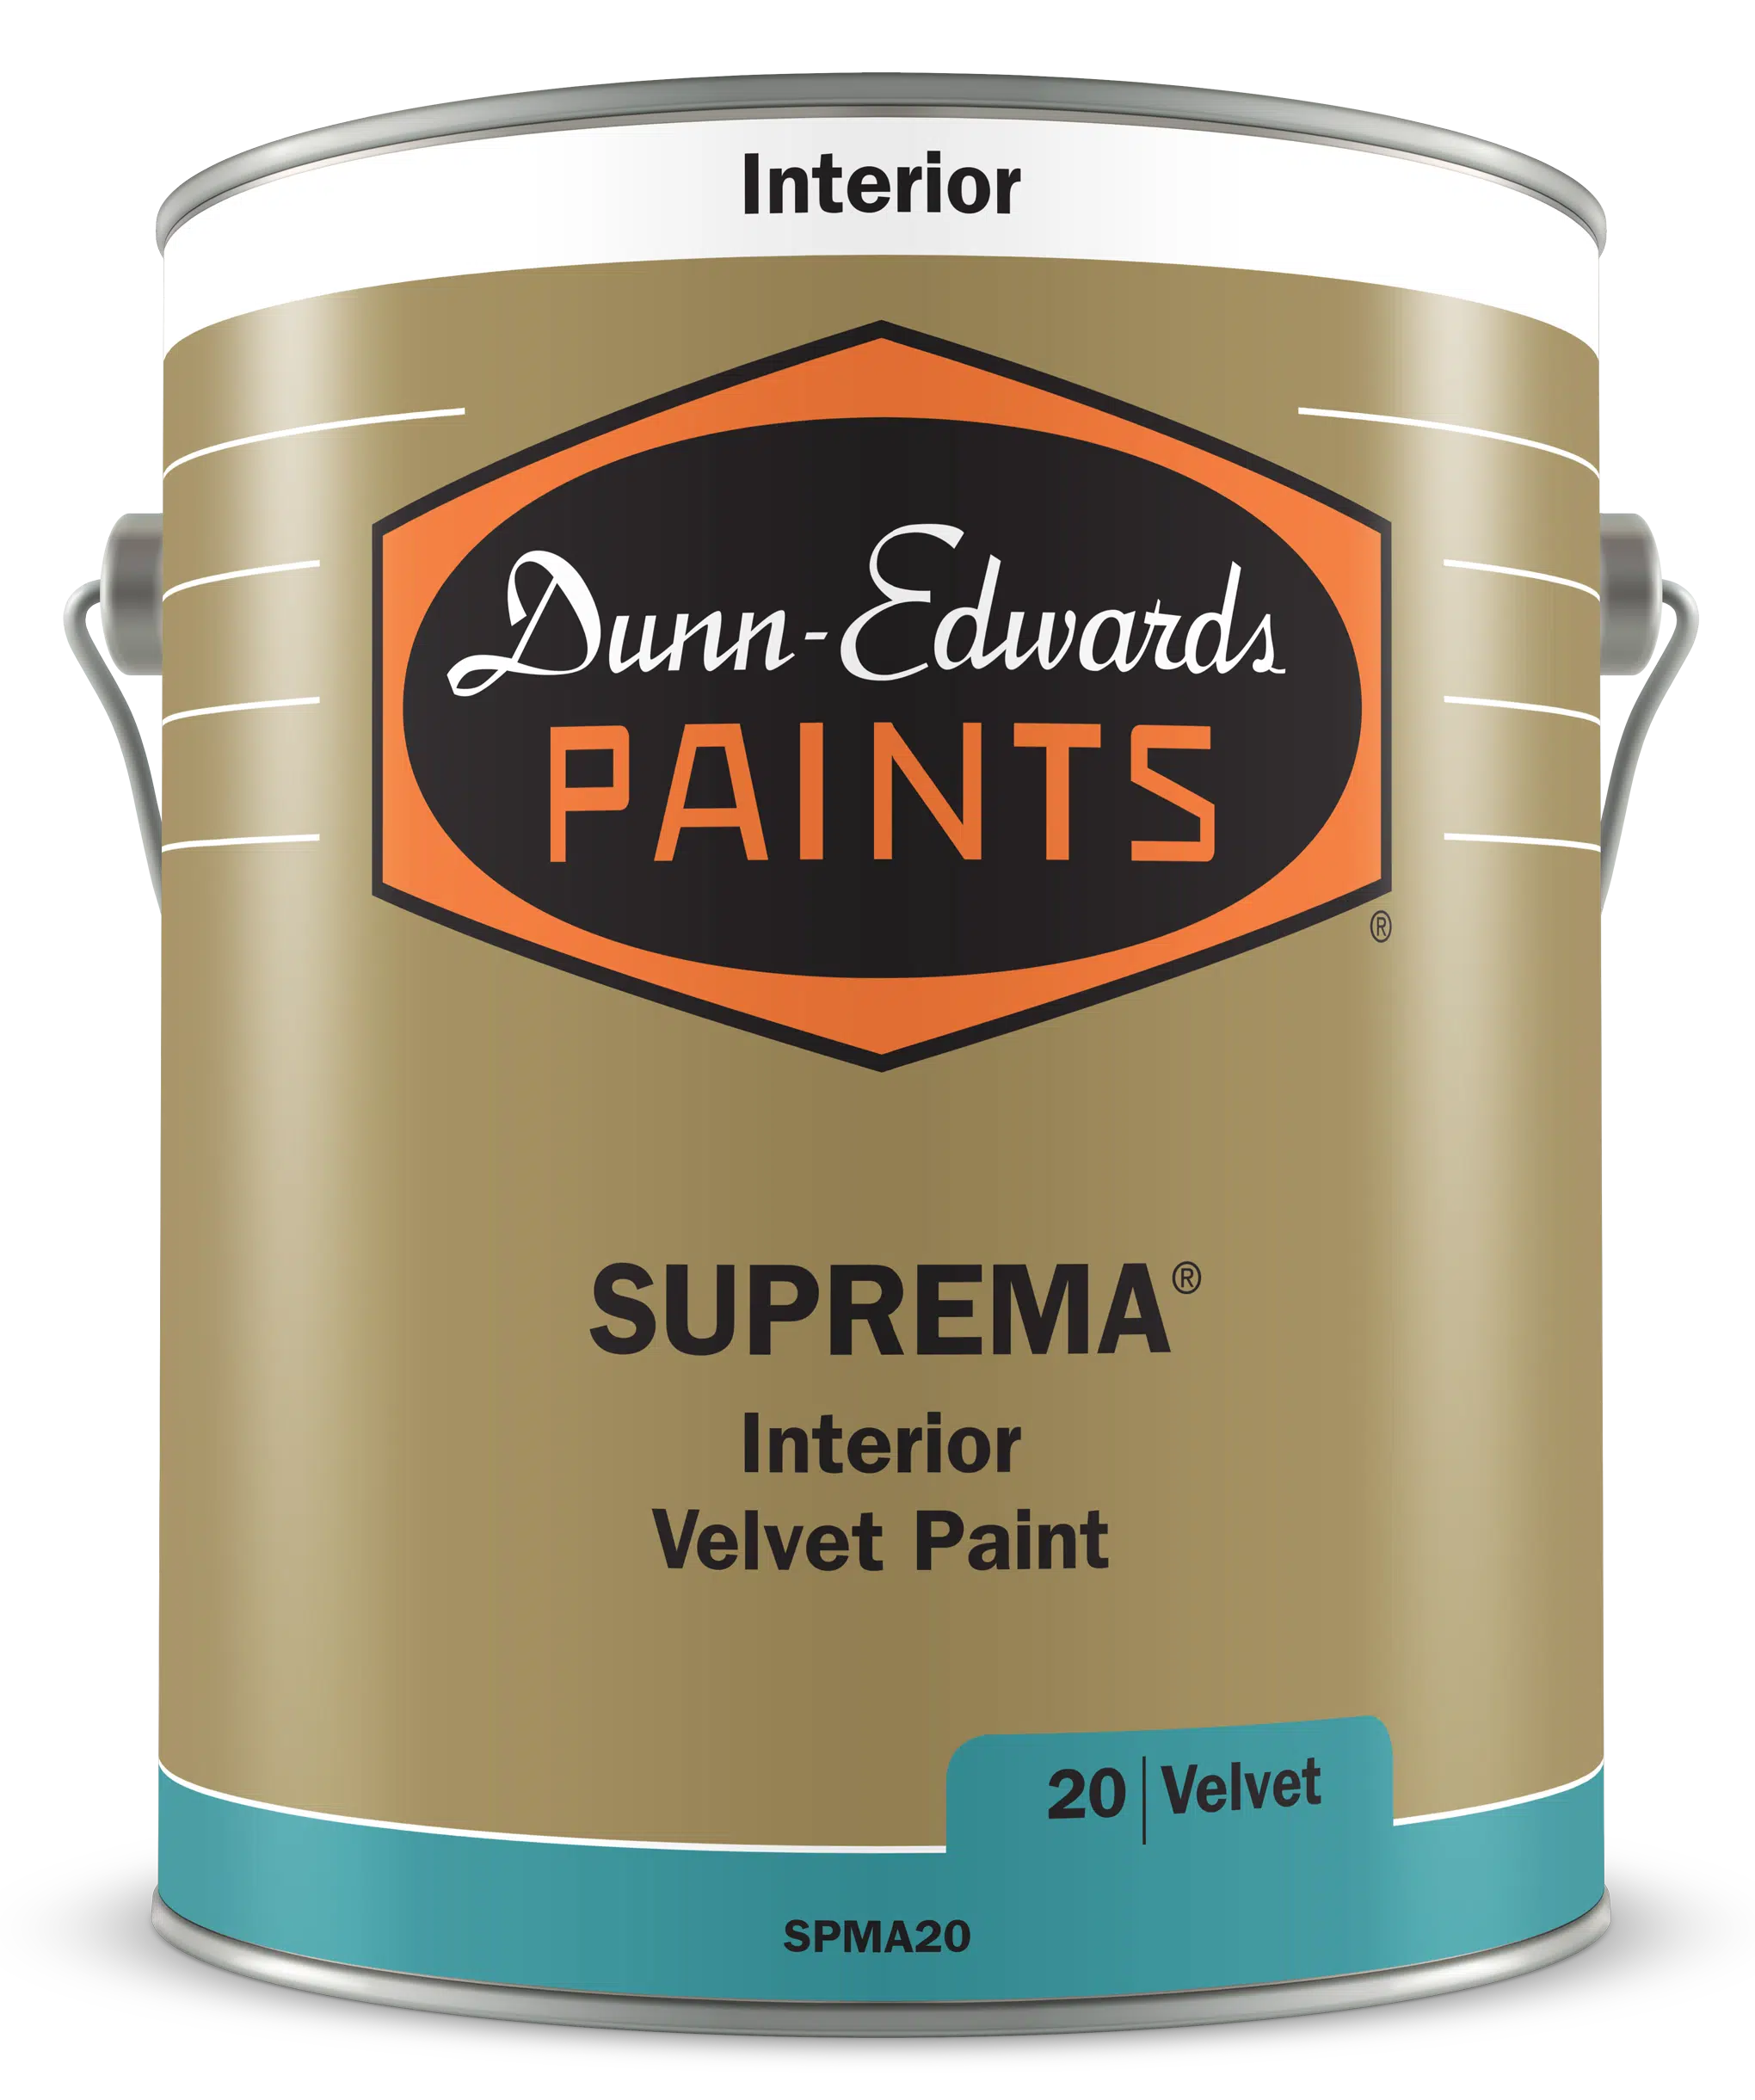 SUPREMA Interior Velvet Paint Can